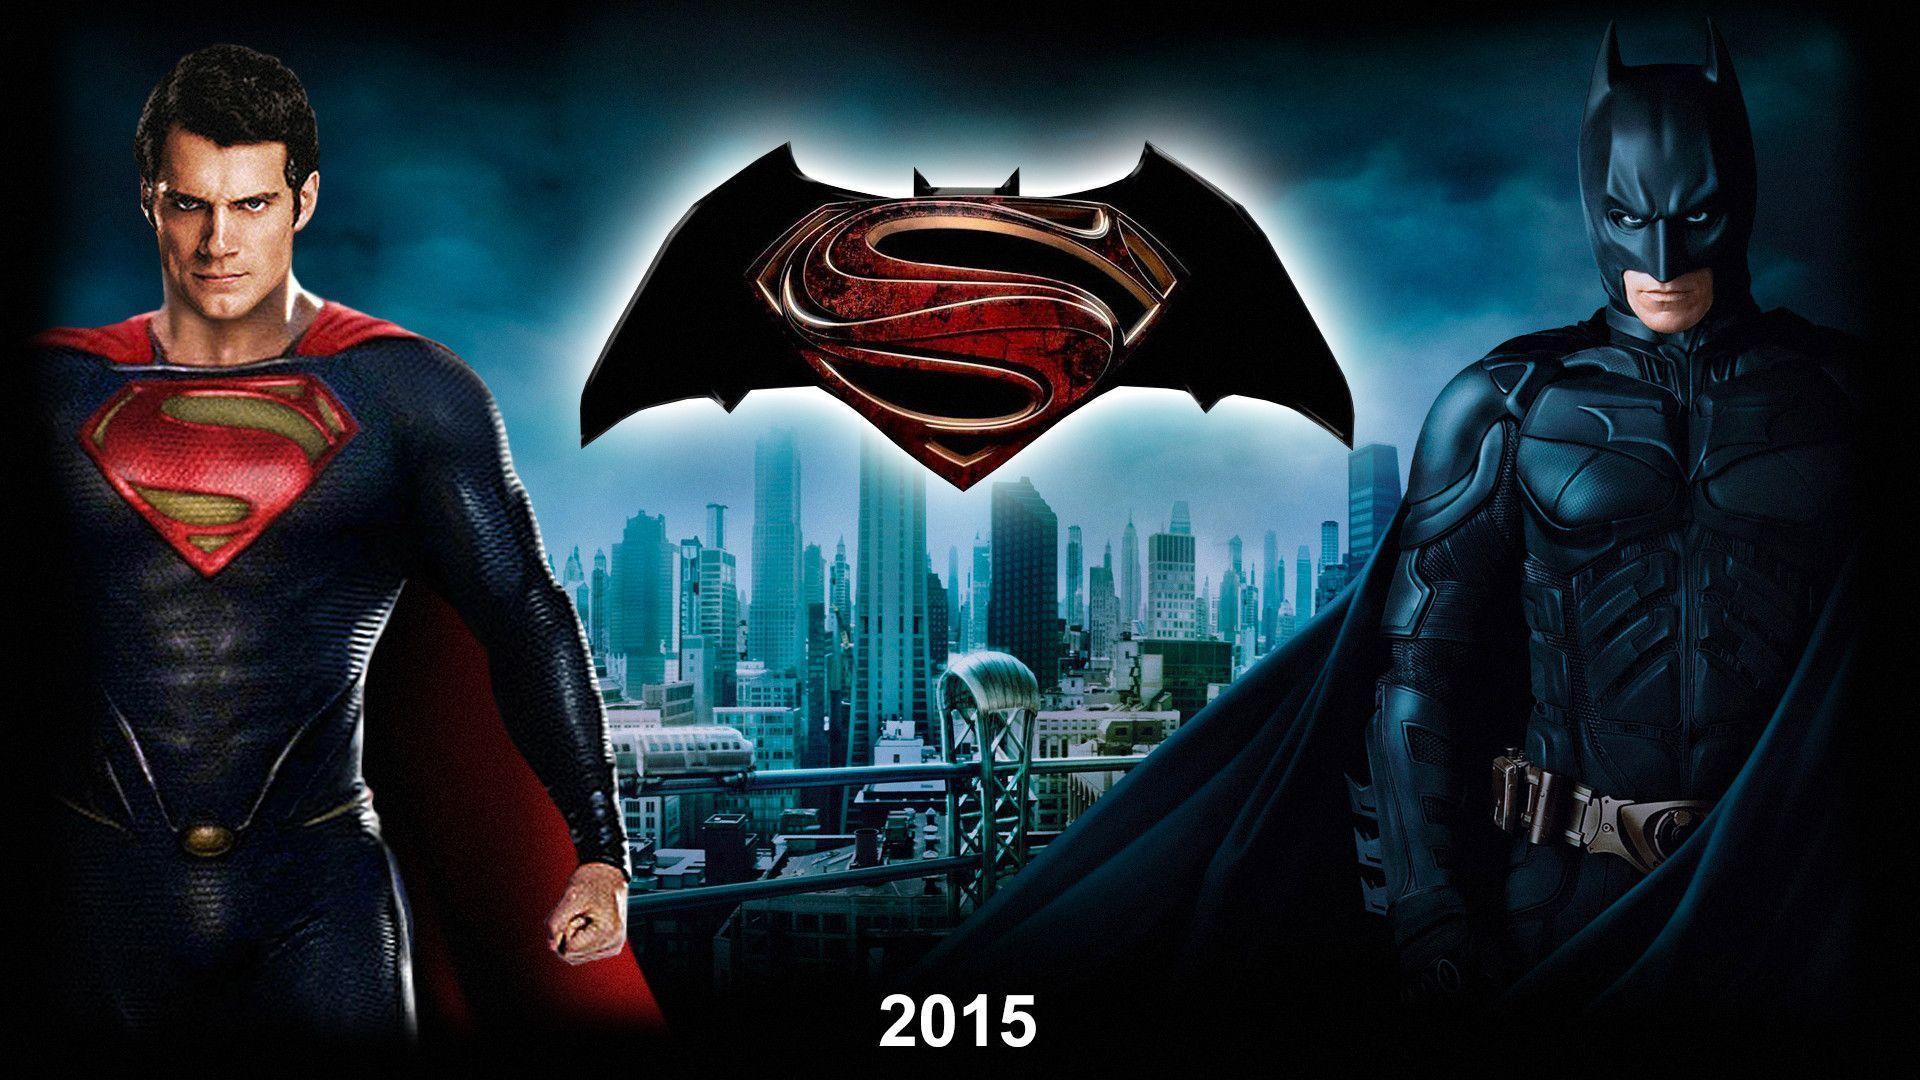 Batman Vs Superman 2015 Movie Wallpaper Wide or HD